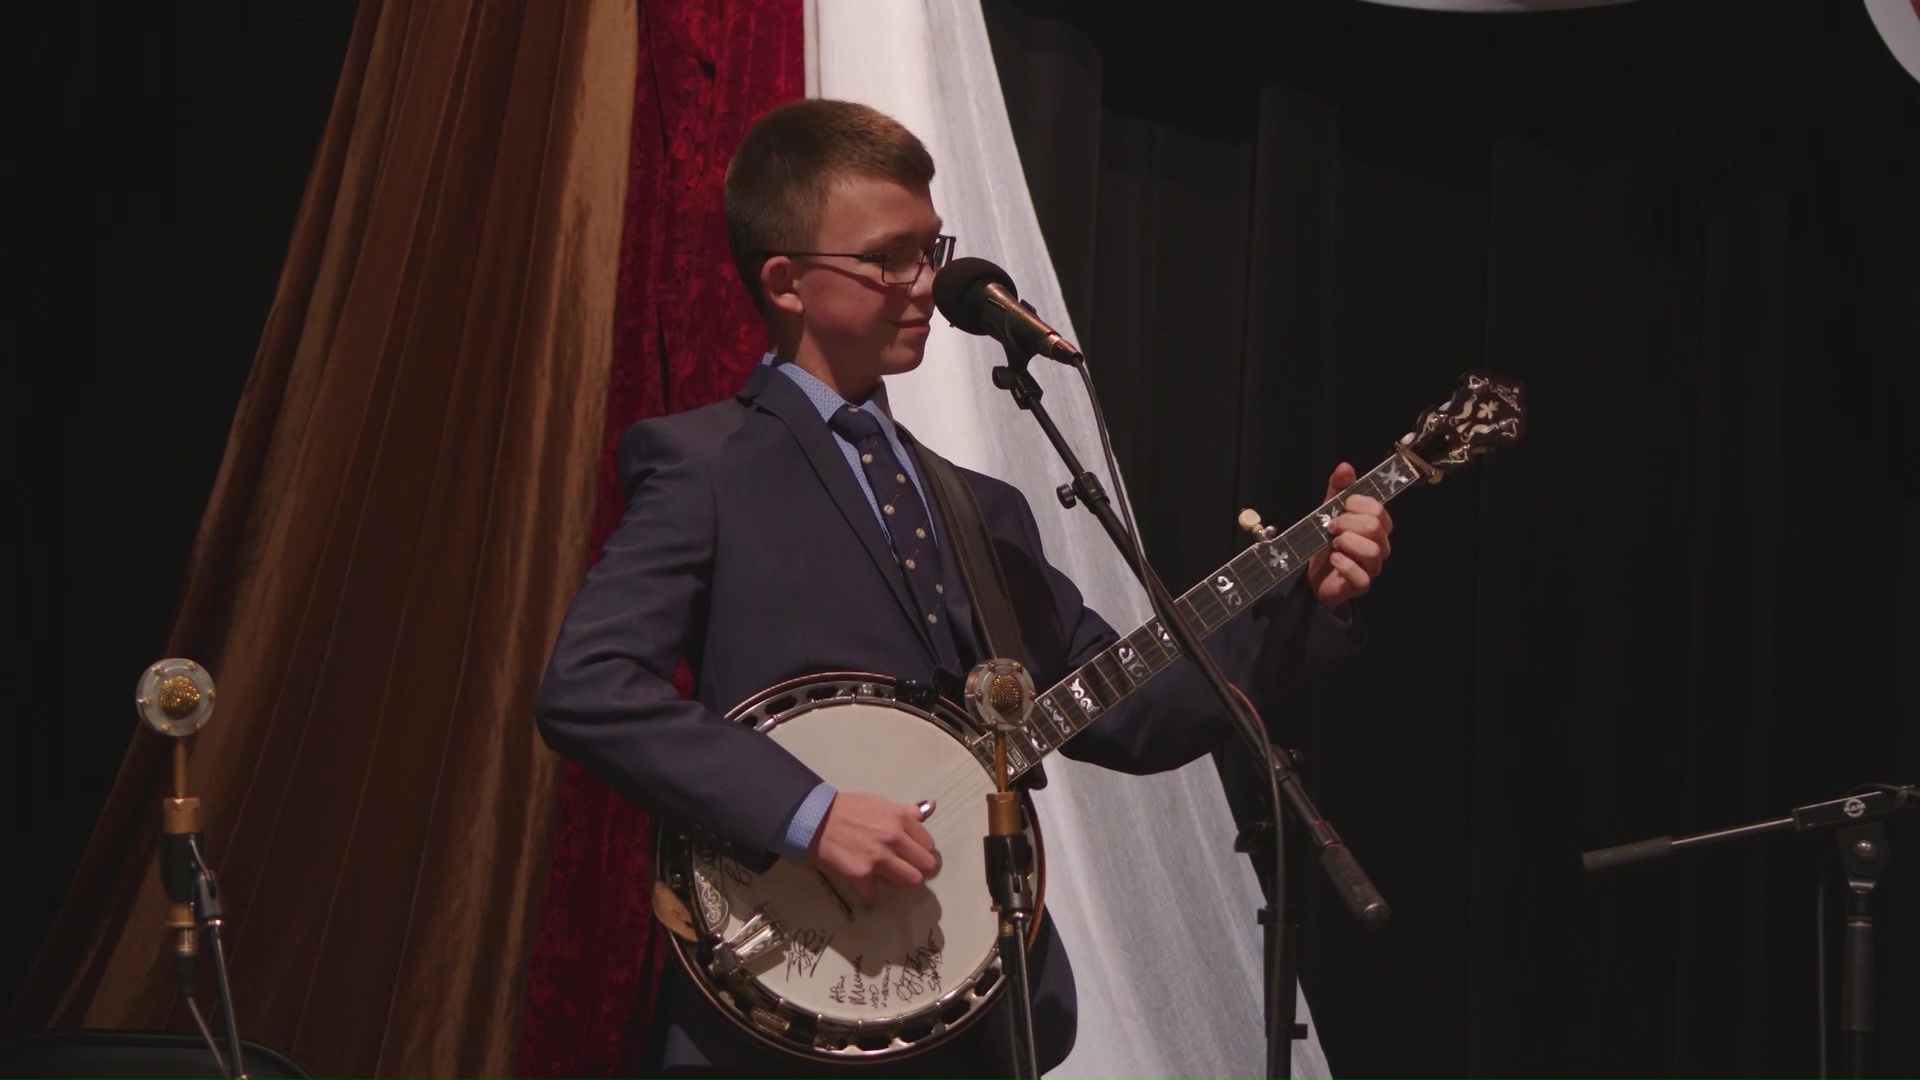 Meet Owen Brockman: A 13-year-old banjo star from Ohio